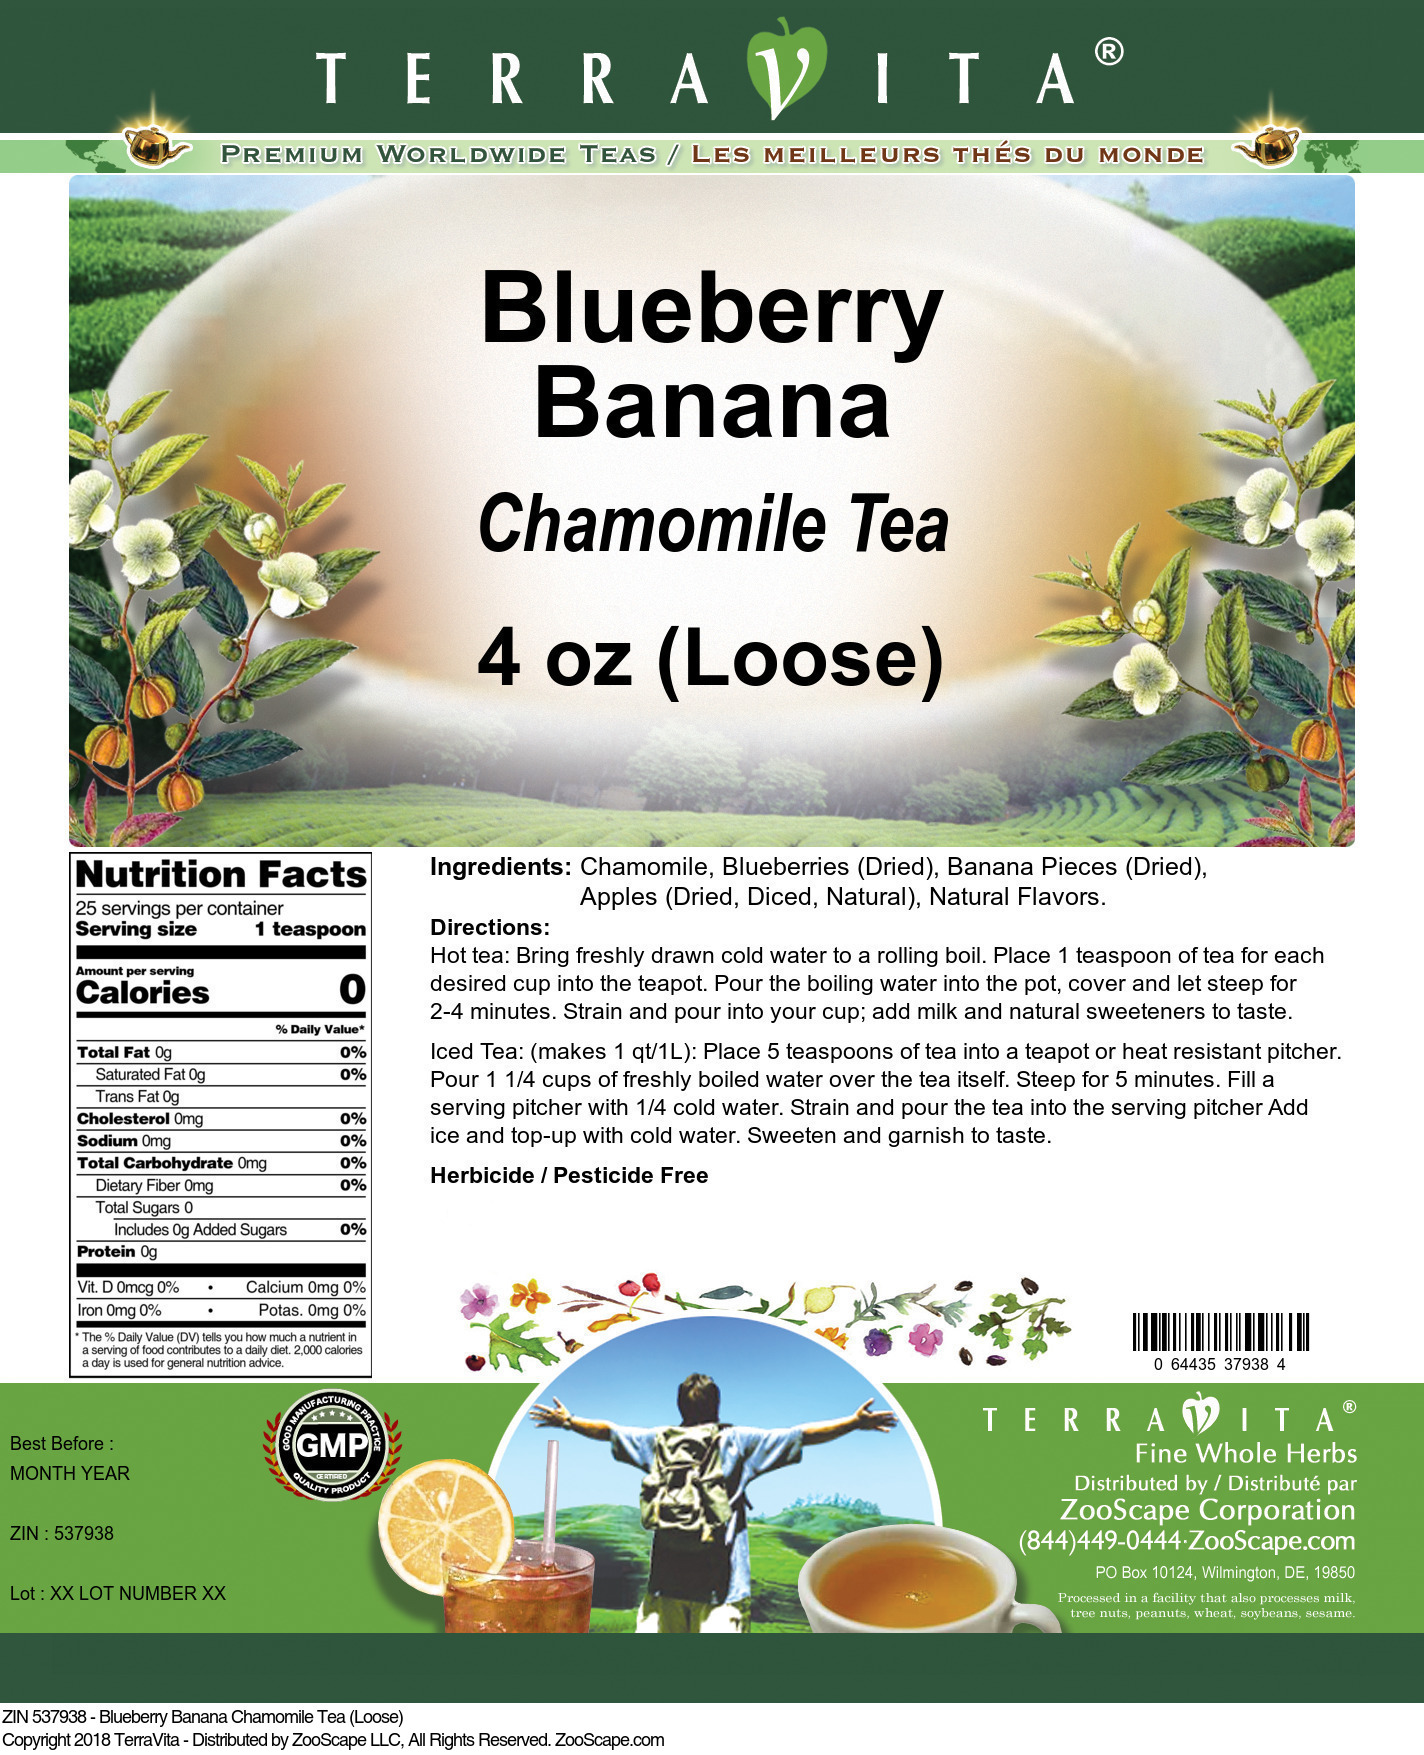 Blueberry Banana Chamomile Tea (Loose) - Label